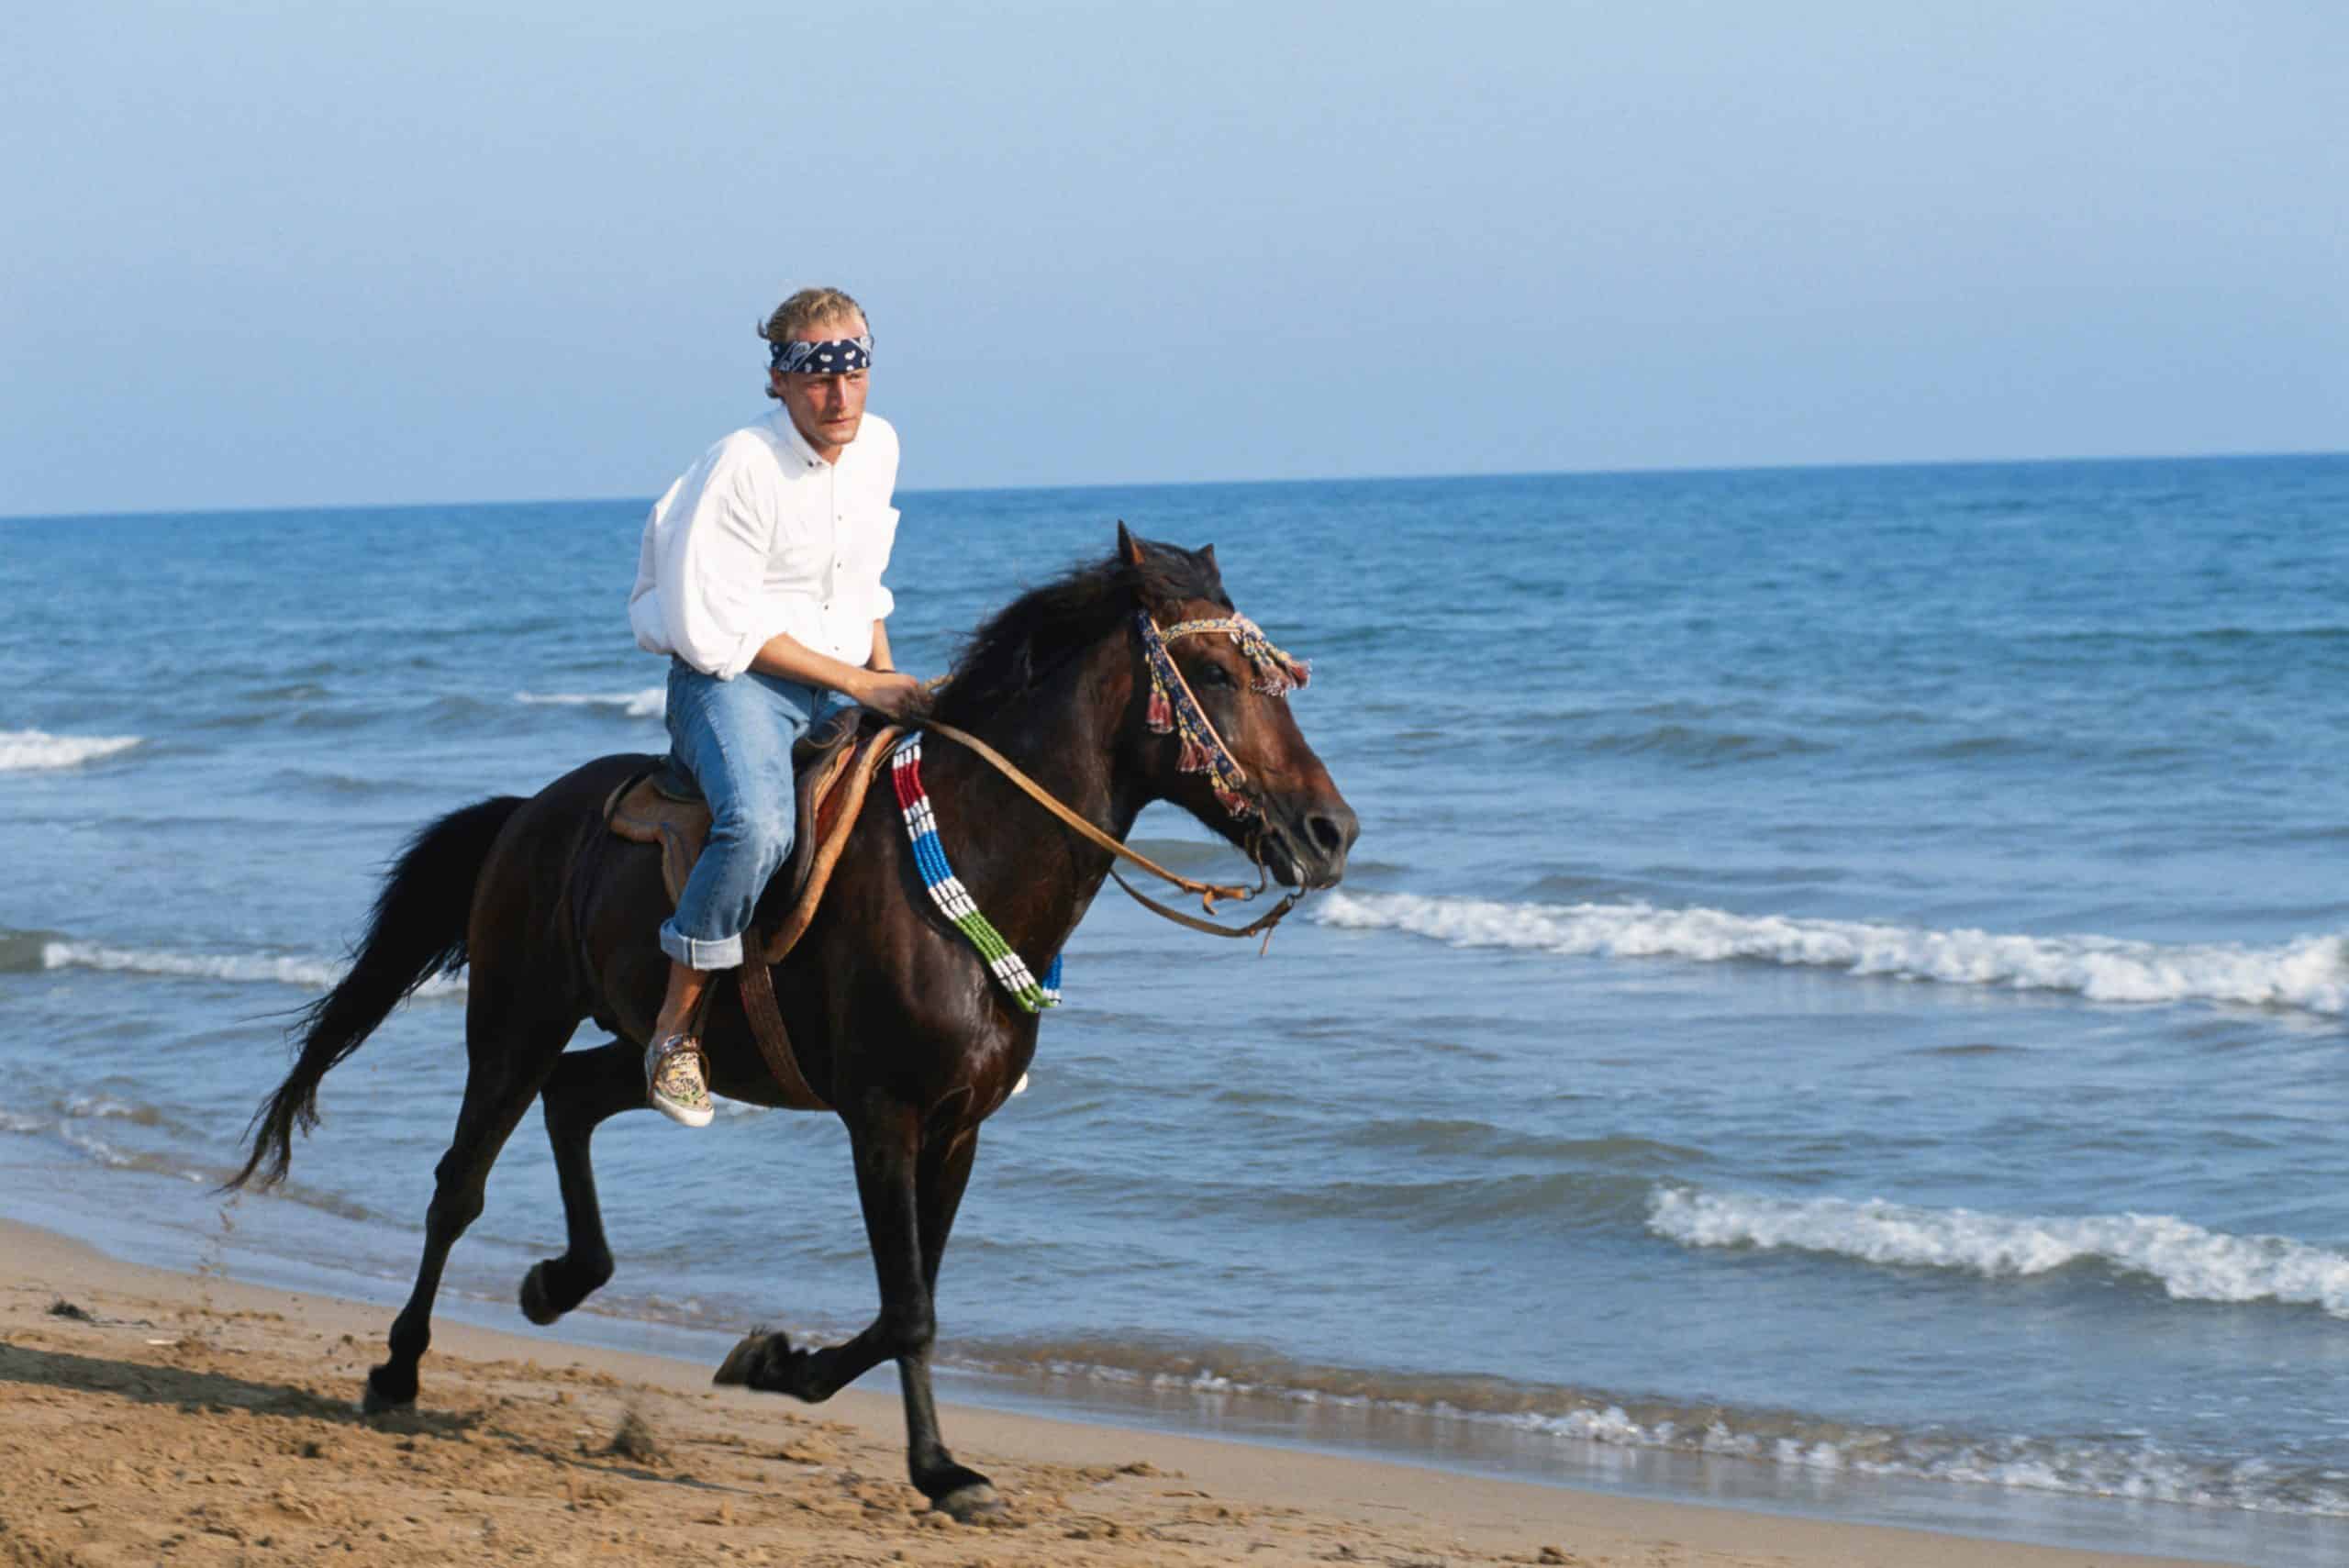 Man riding equine along beach